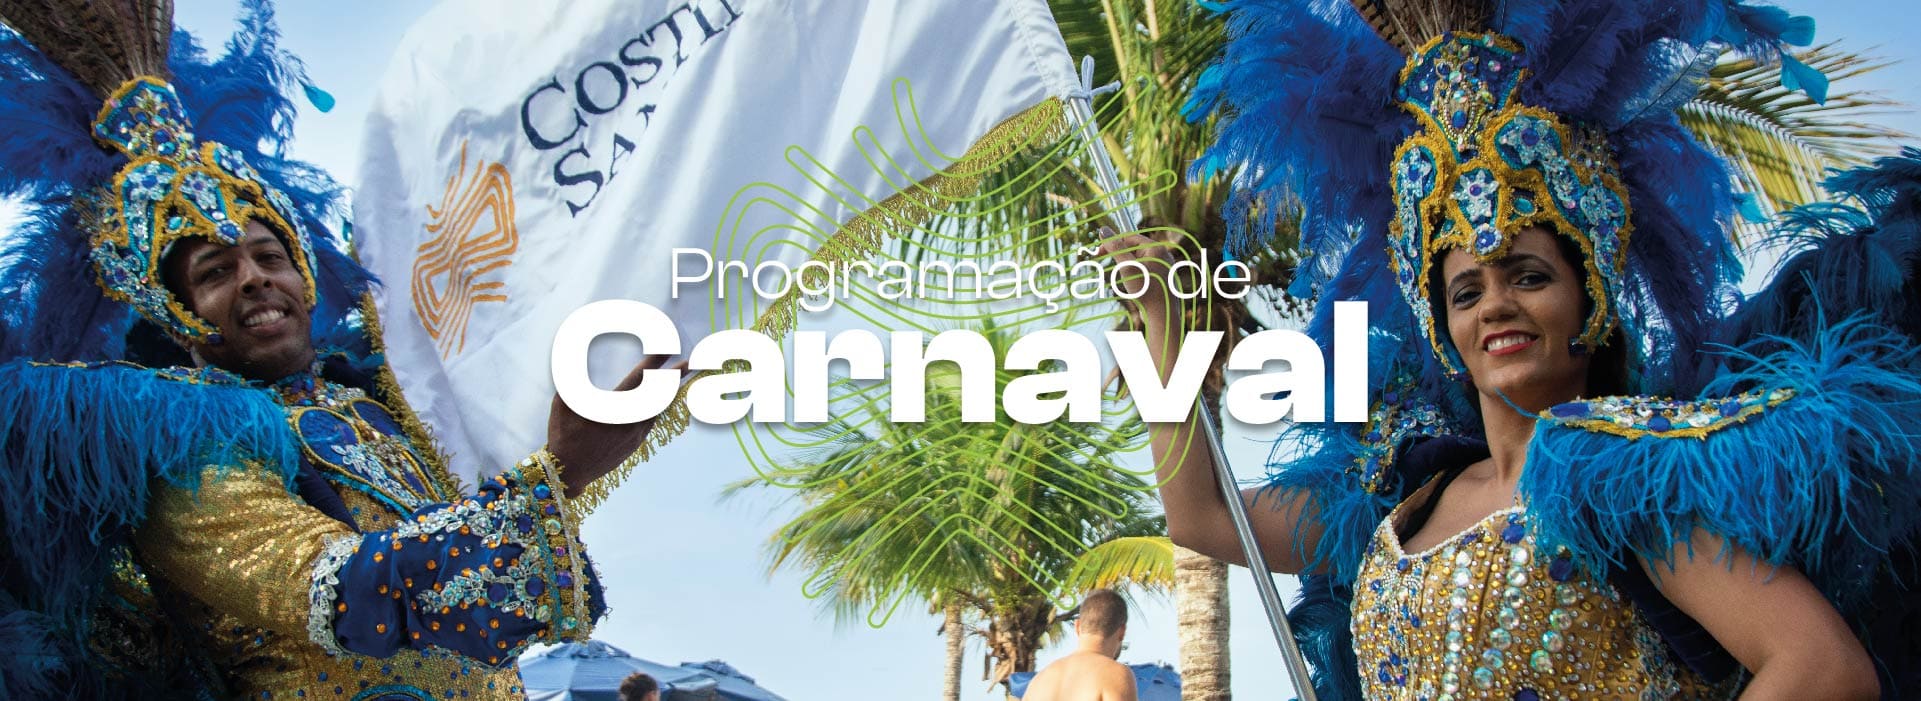 5. Carnaval 